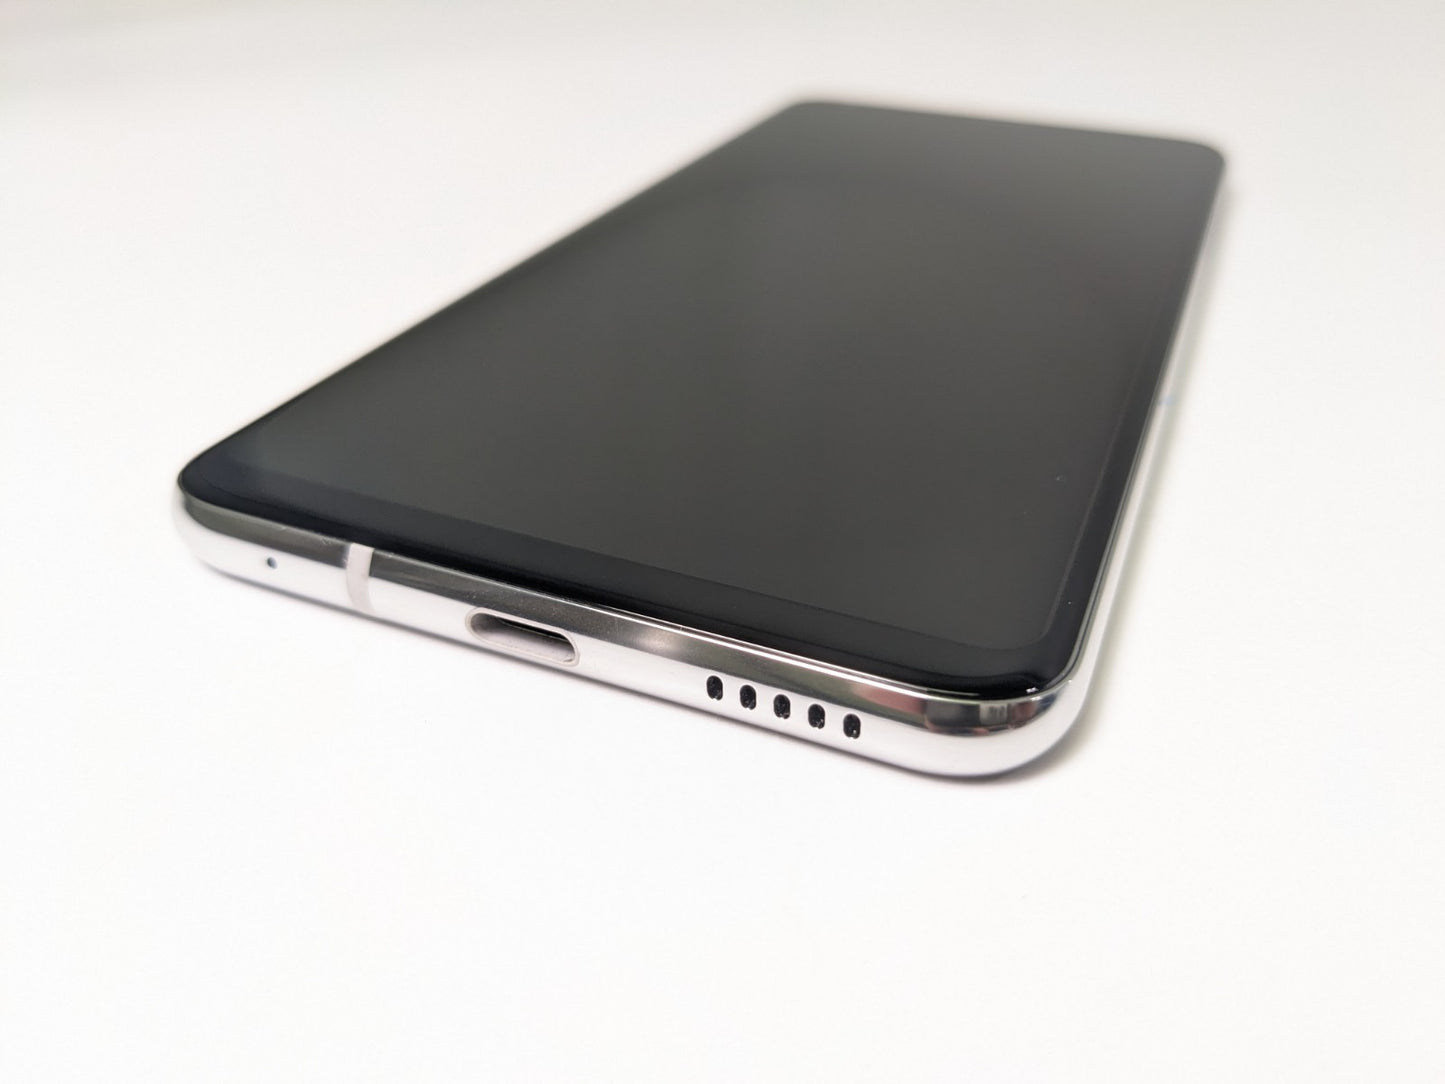 LG - V30 64GB Unlocked Smartphone - US998 669.99